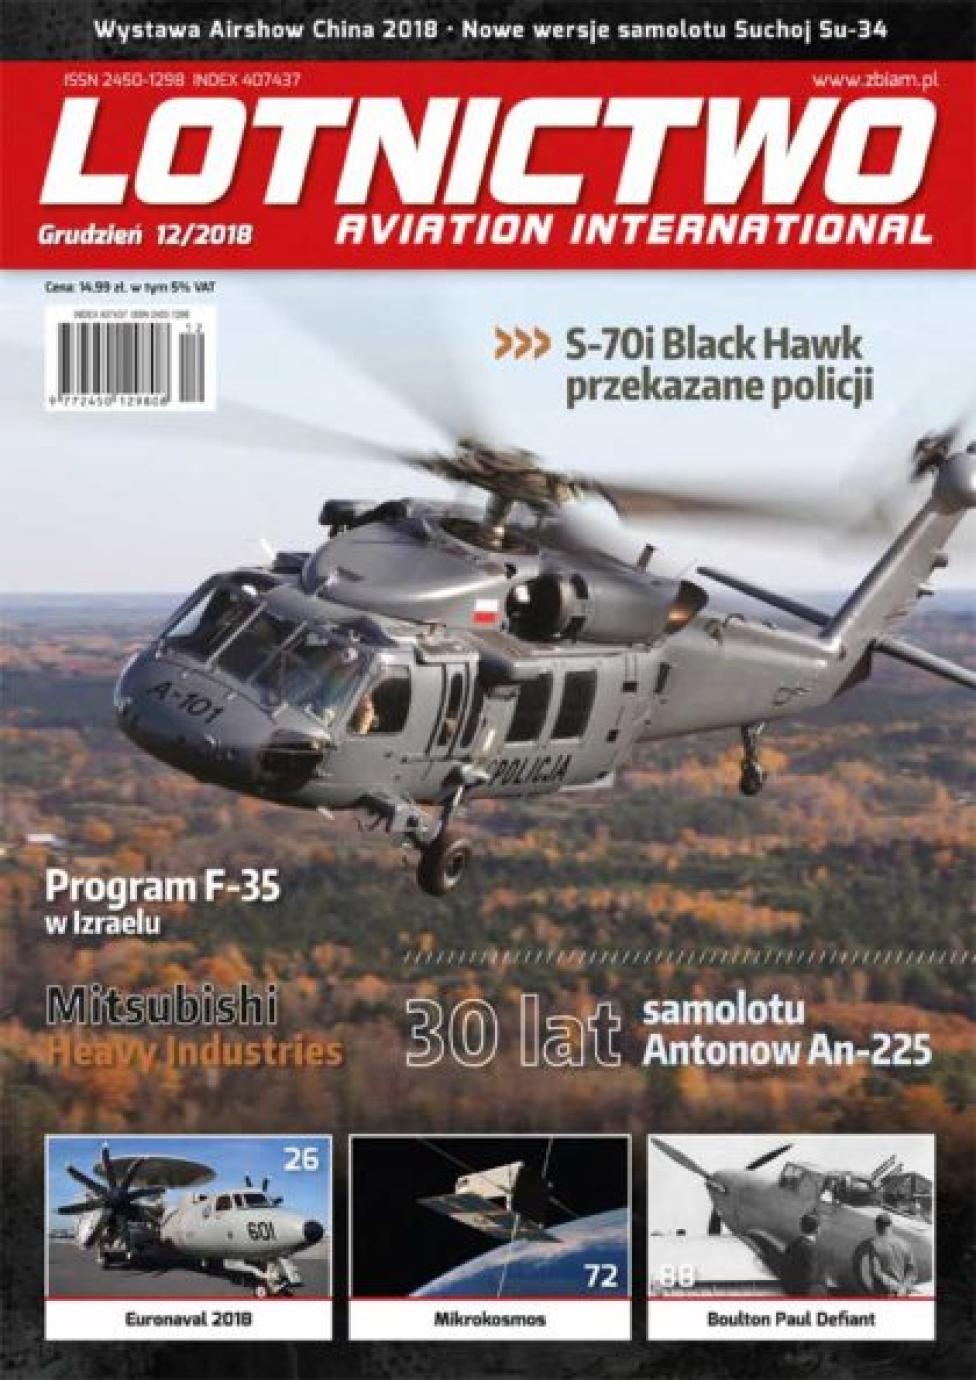 Lotnictwo Aviation International 12/2018